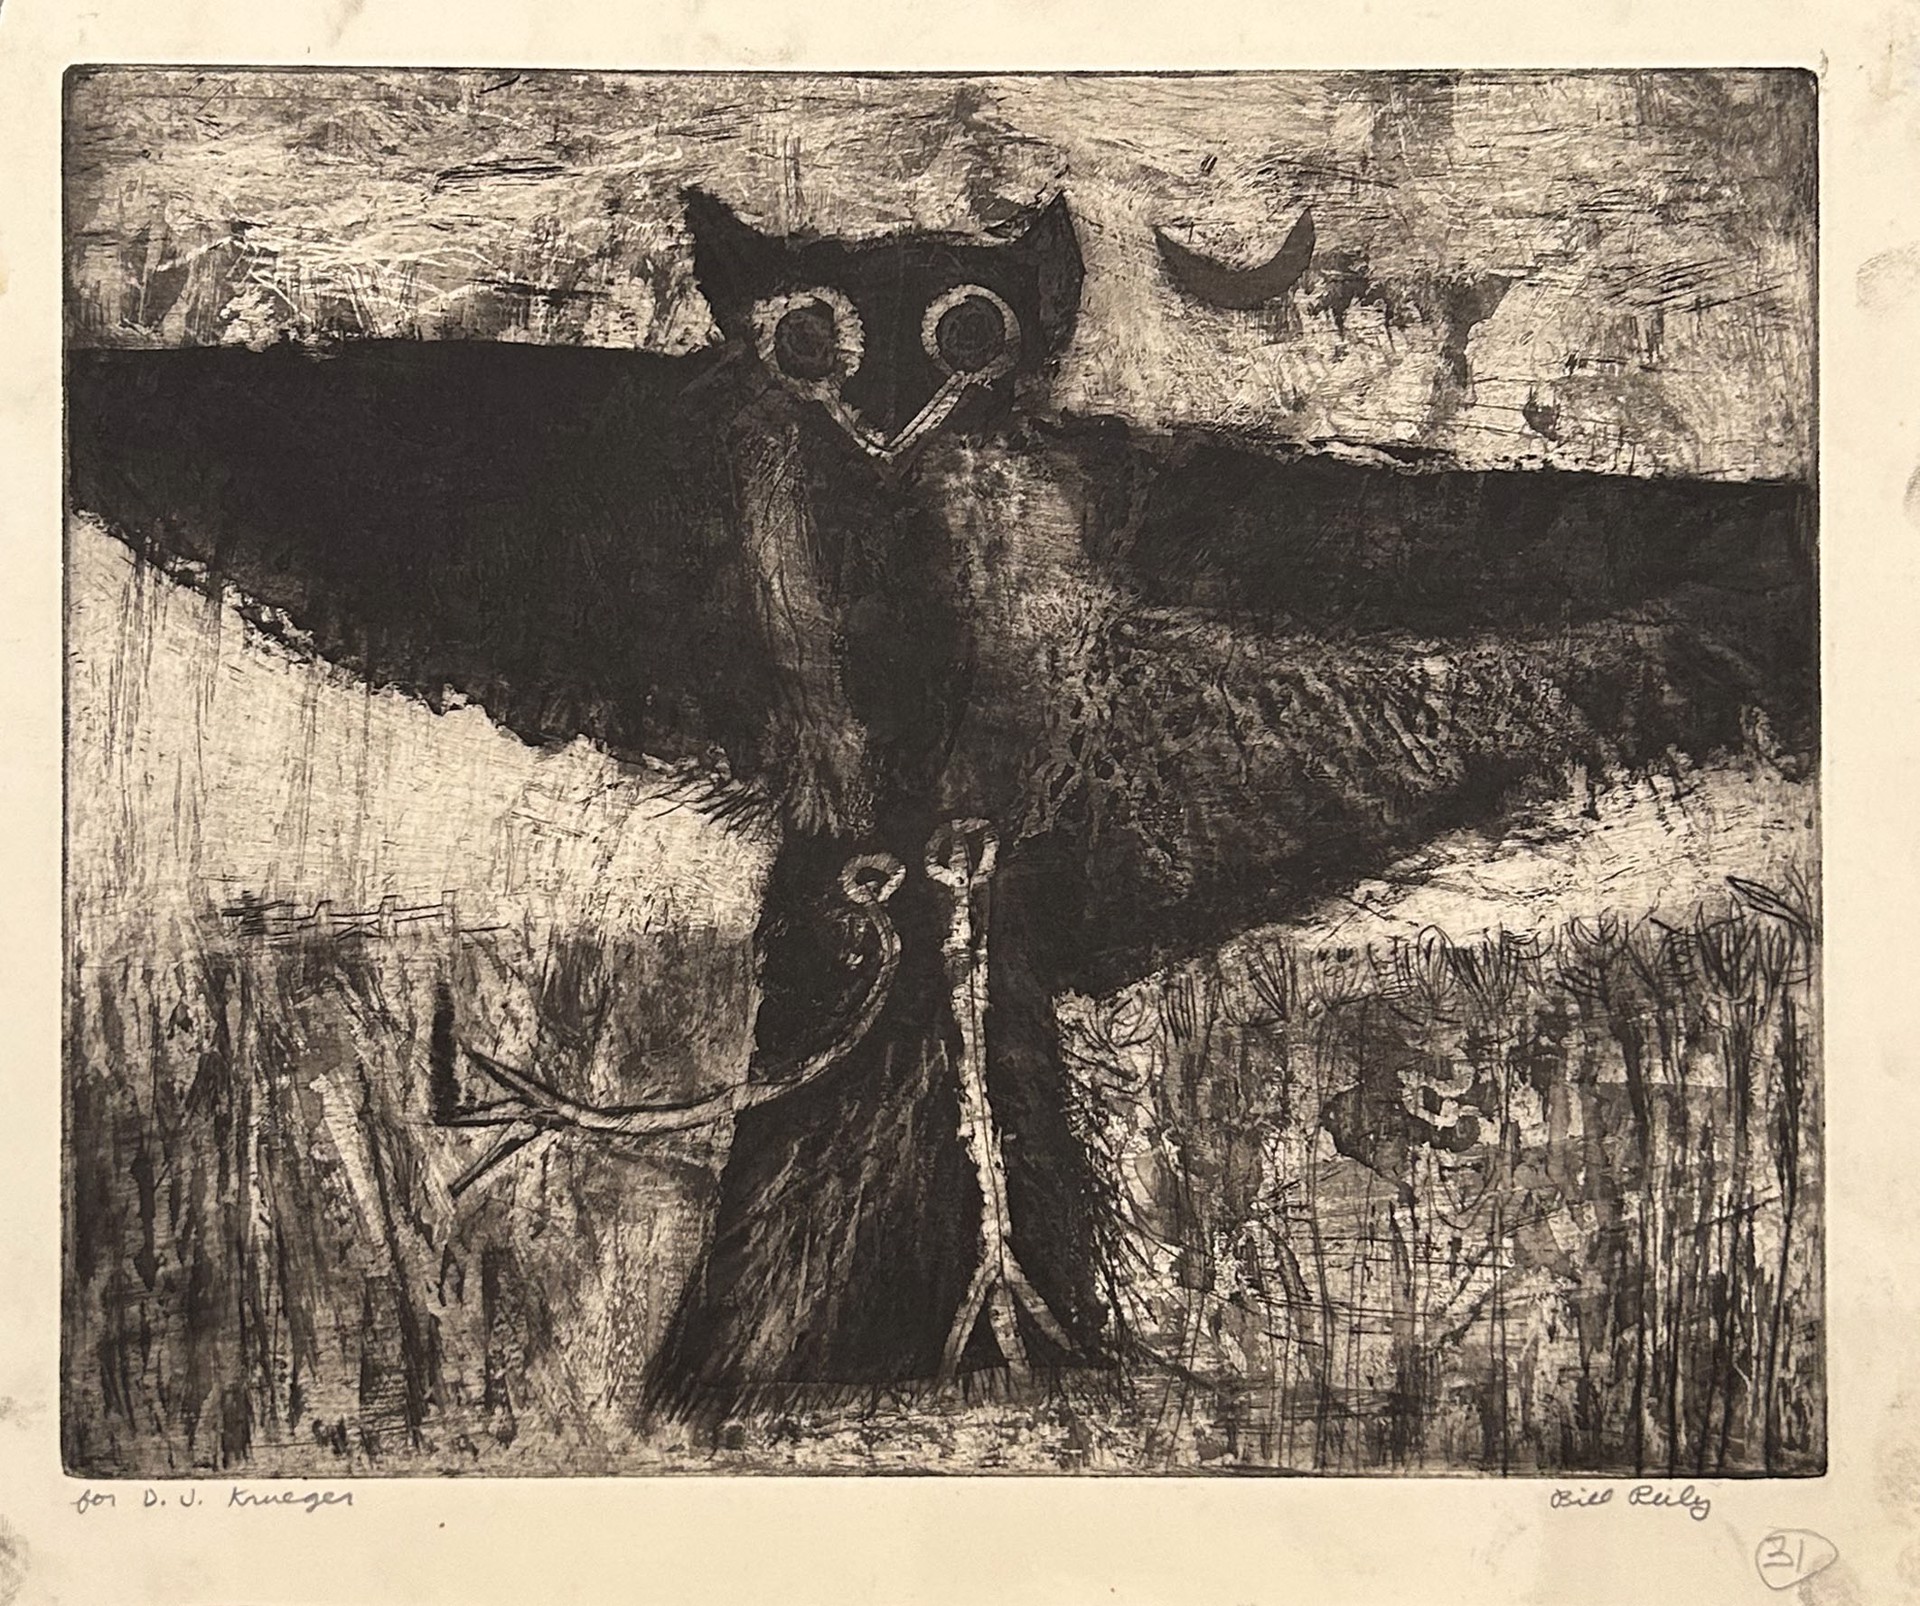 31a. Owl (for D.J. Krueger) by Bill Reily - Prints